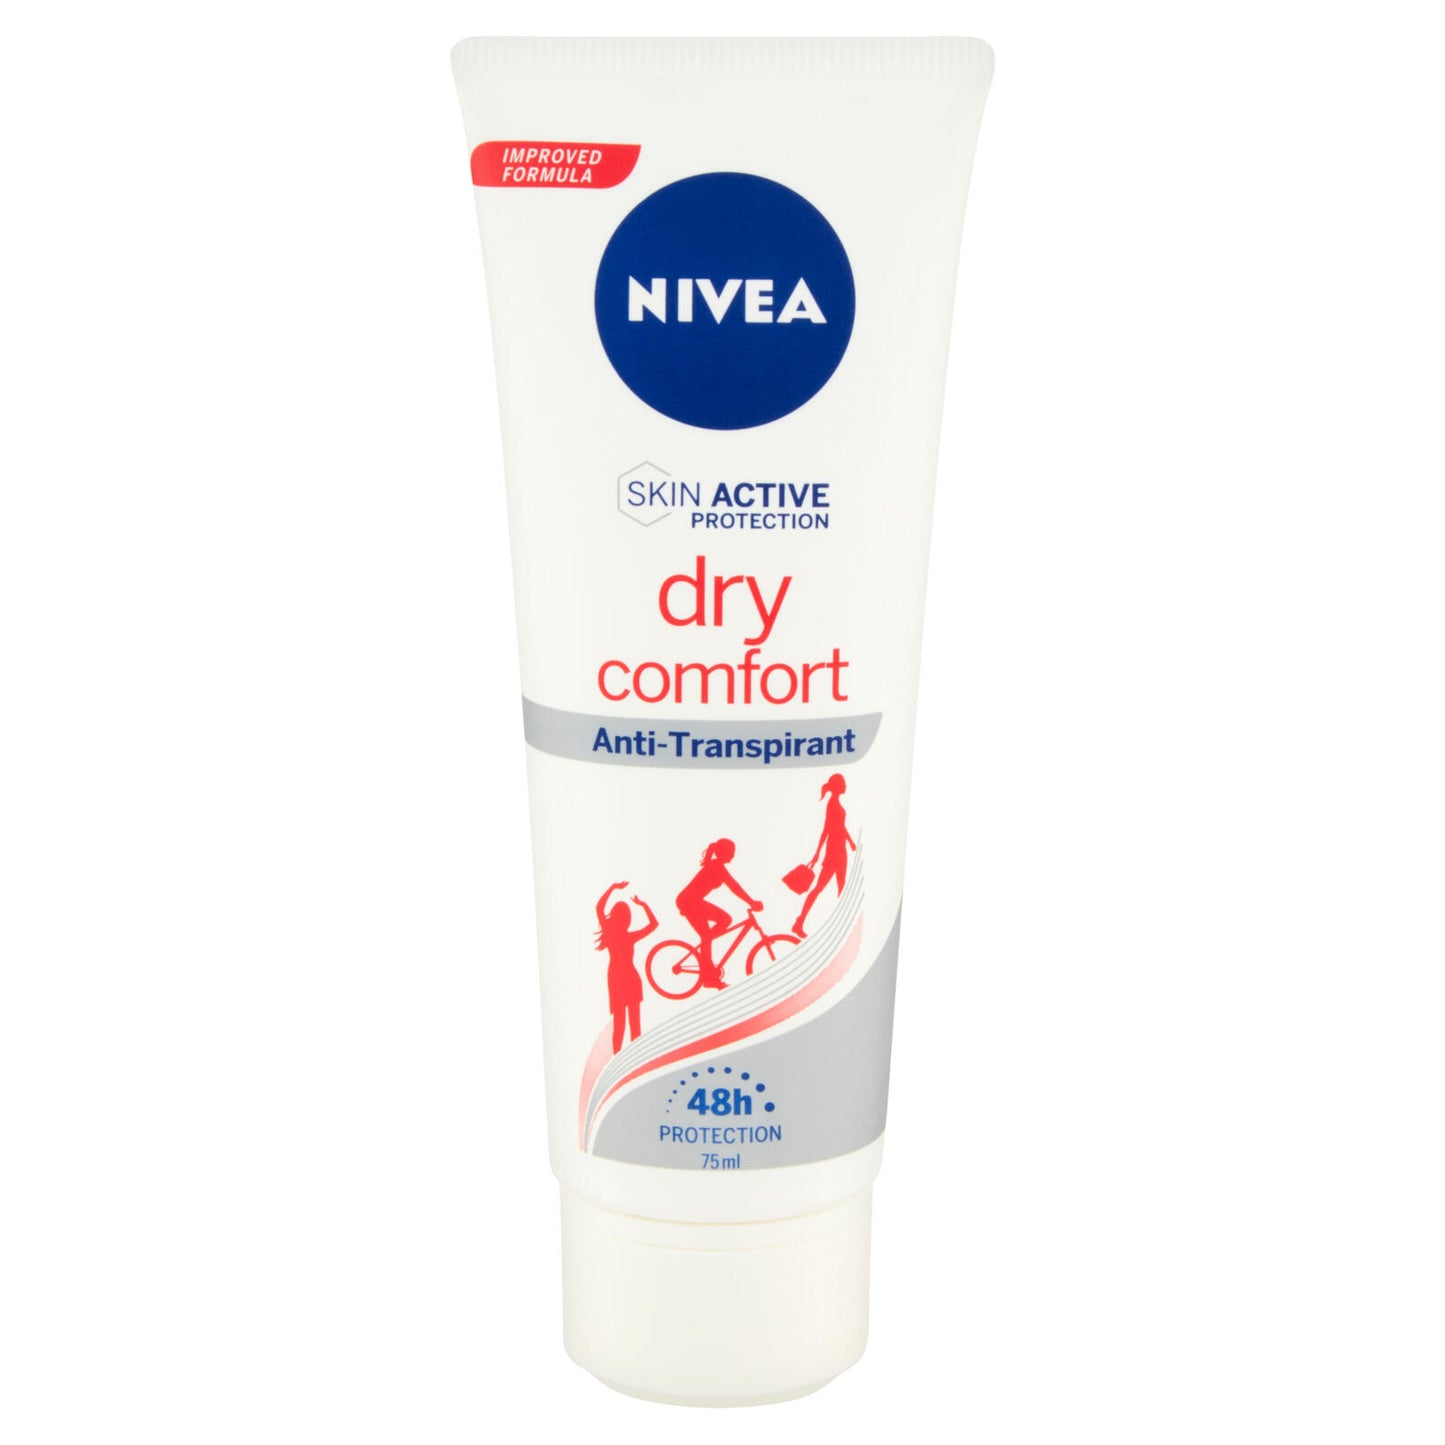 Nivea dry comfort Anti-Transpirant 75 ml